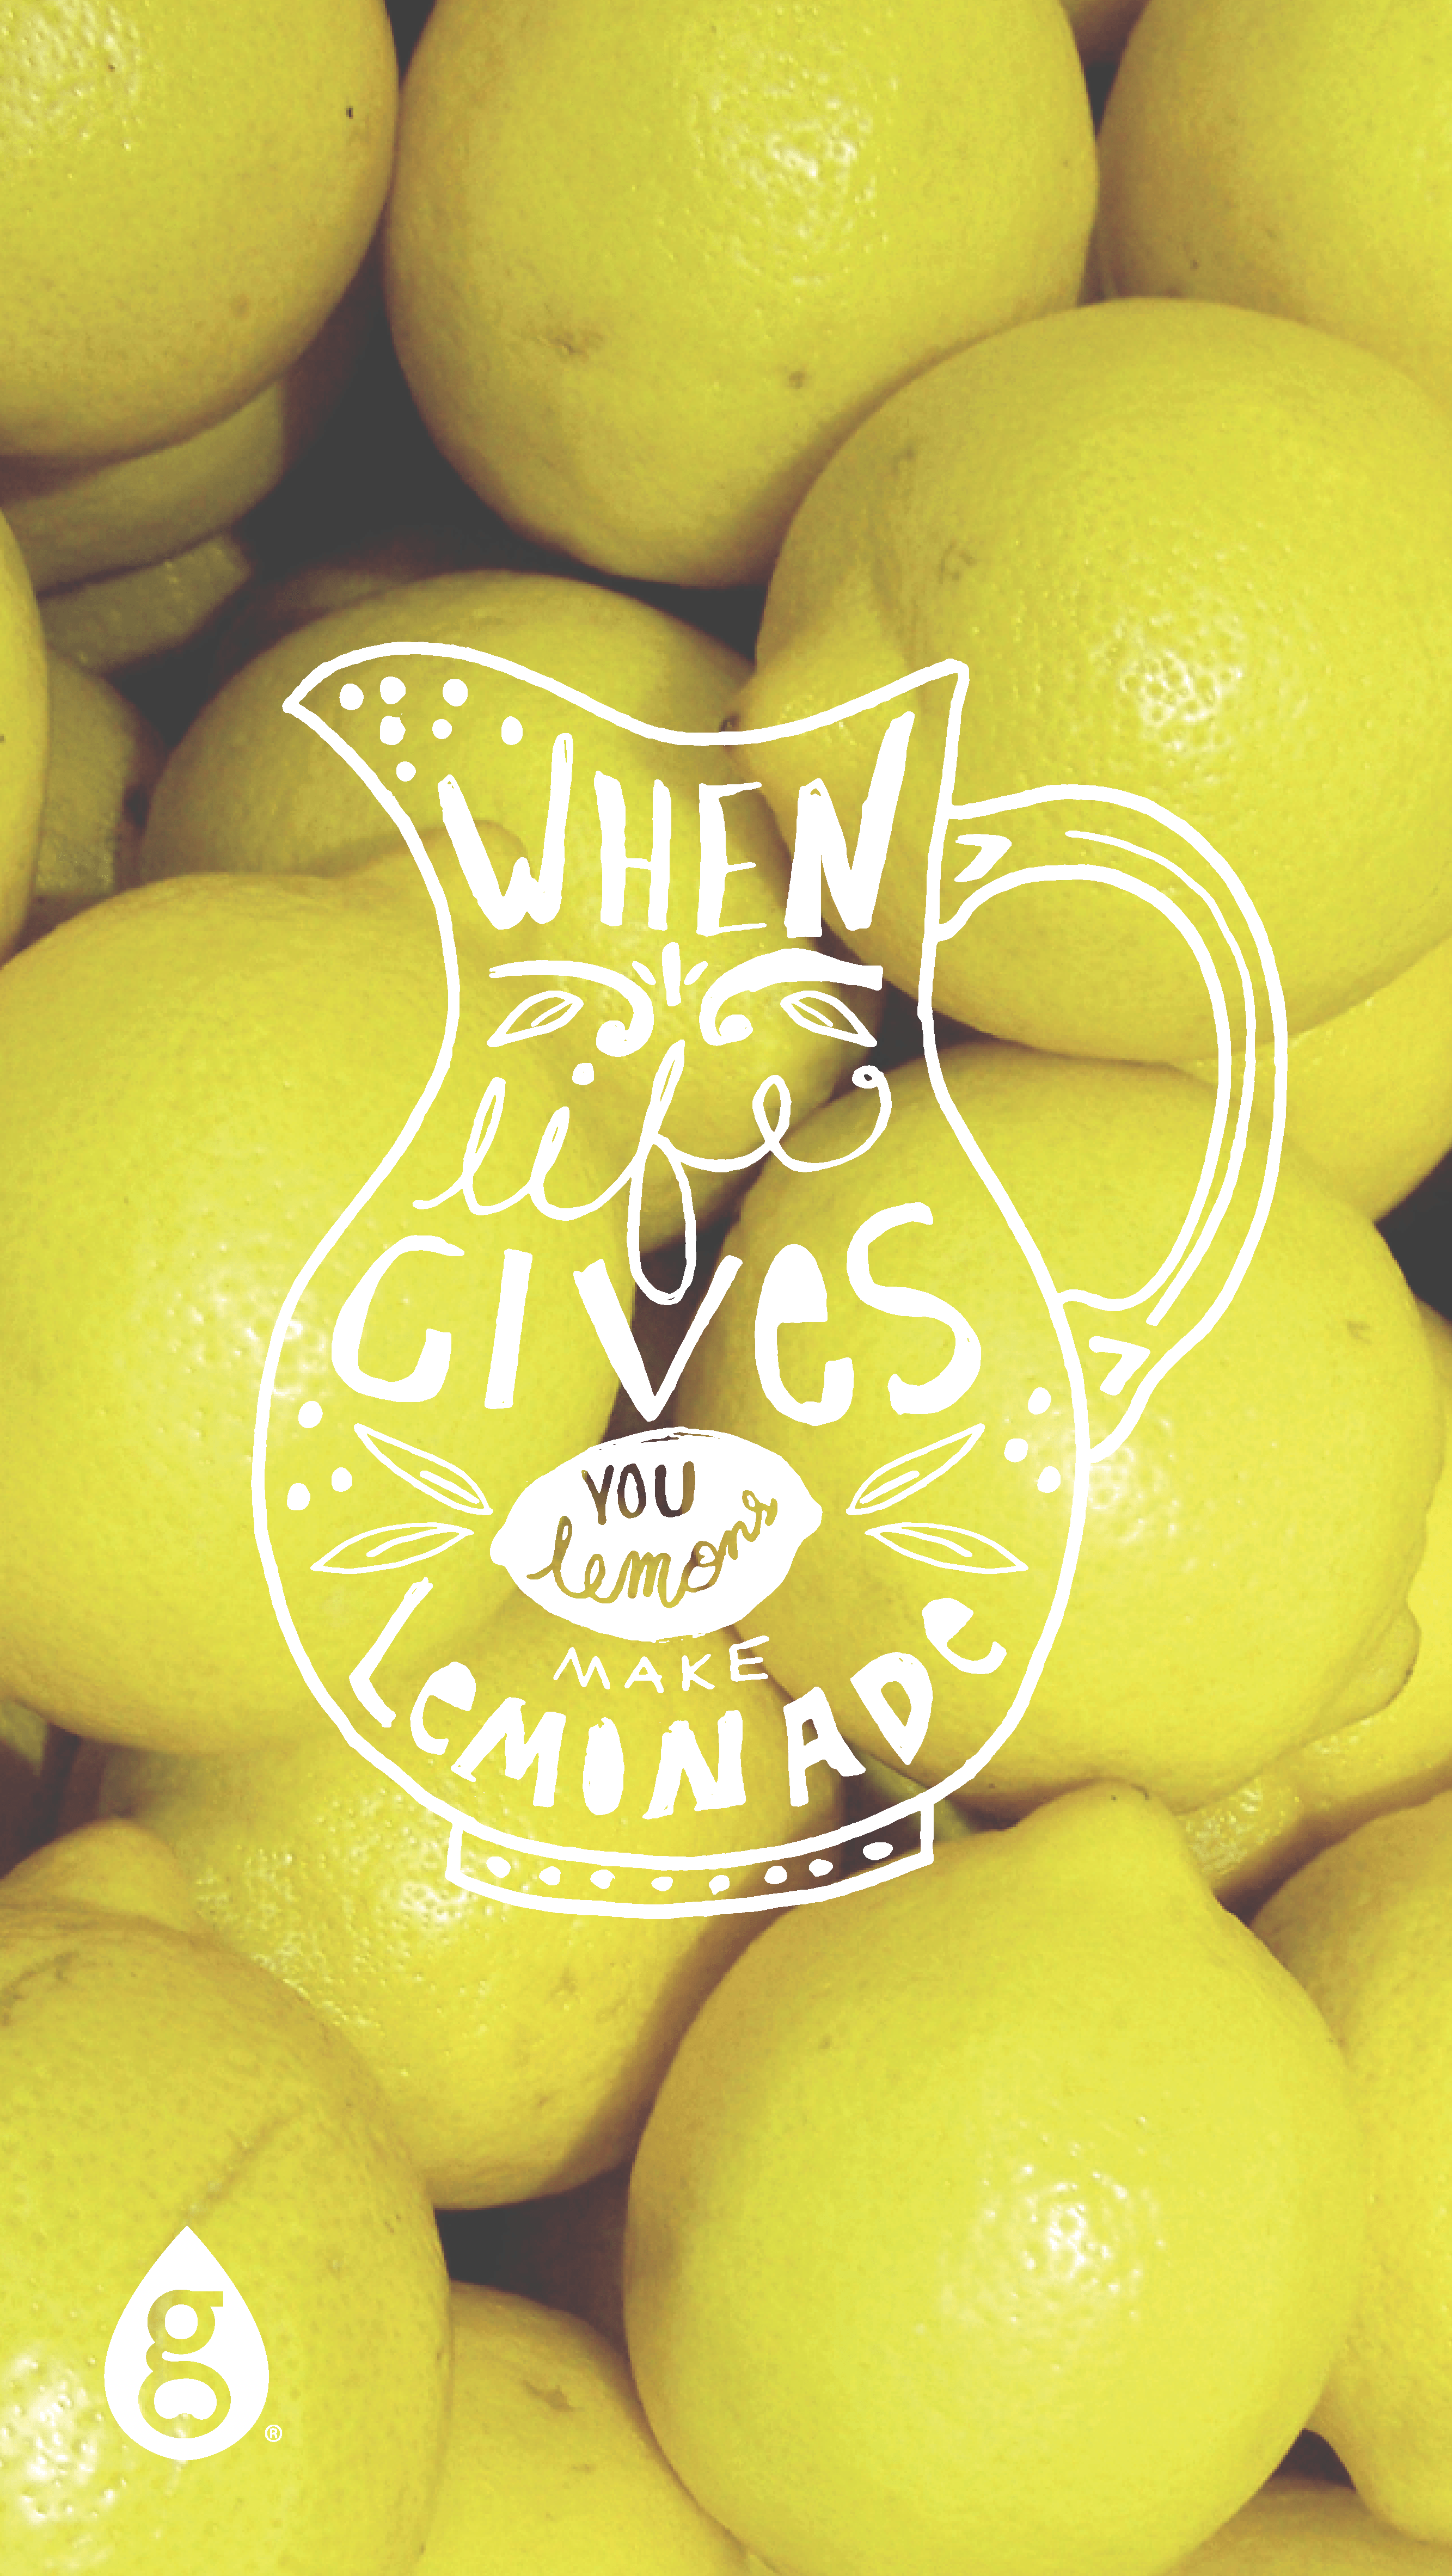 When life gives you lemons, make lemonade. Geneologie. Greek Life